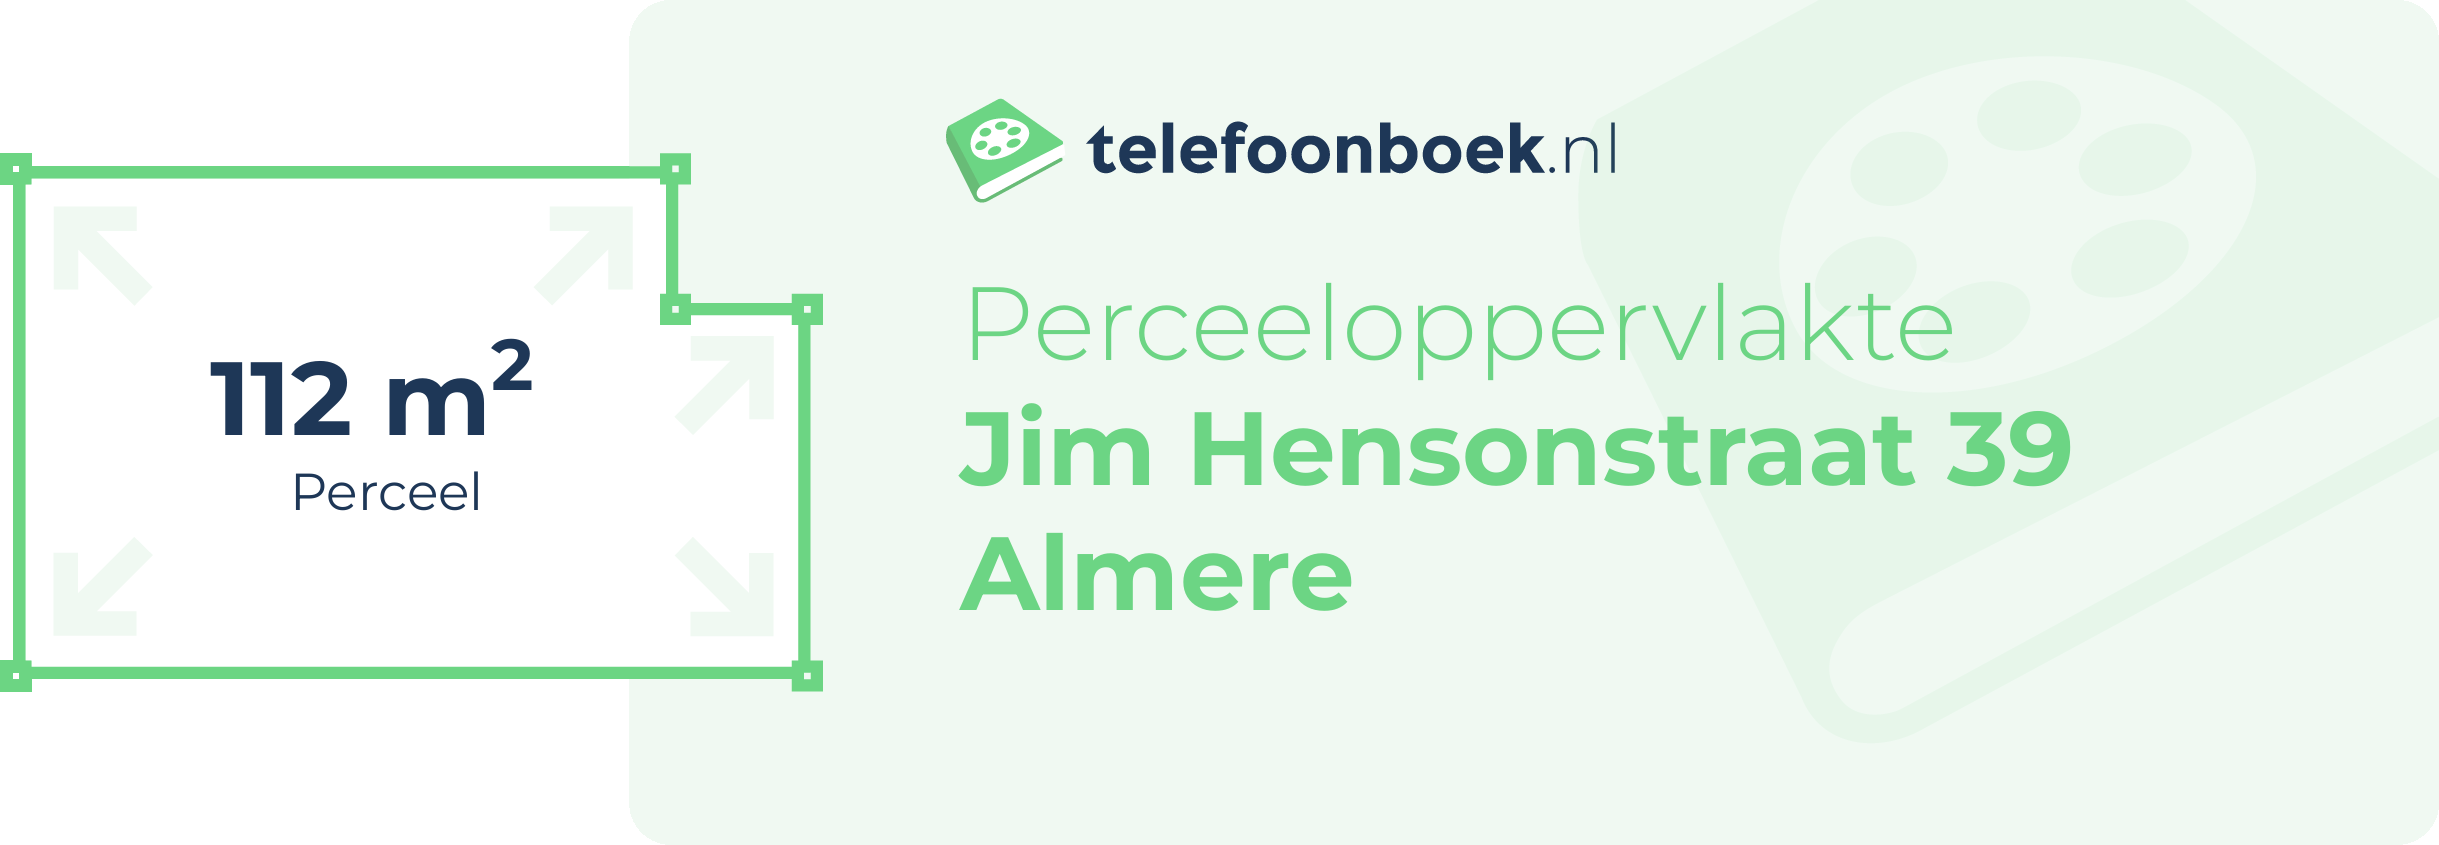 Perceeloppervlakte Jim Hensonstraat 39 Almere